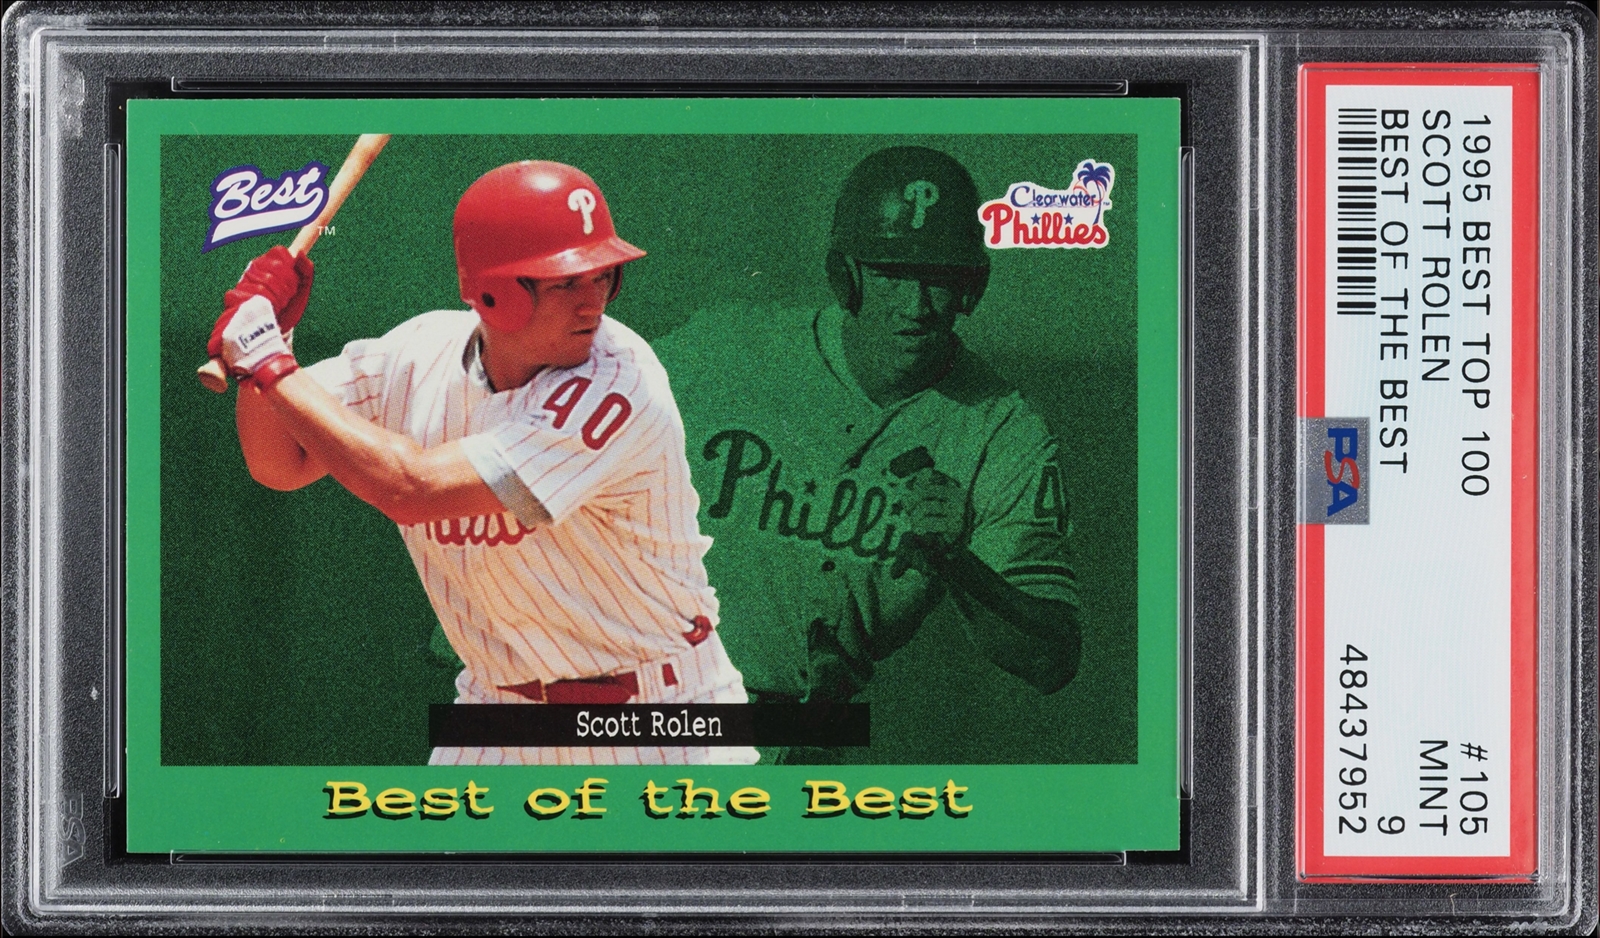 At Auction: Vintage Scott Rolen rookie baseball card